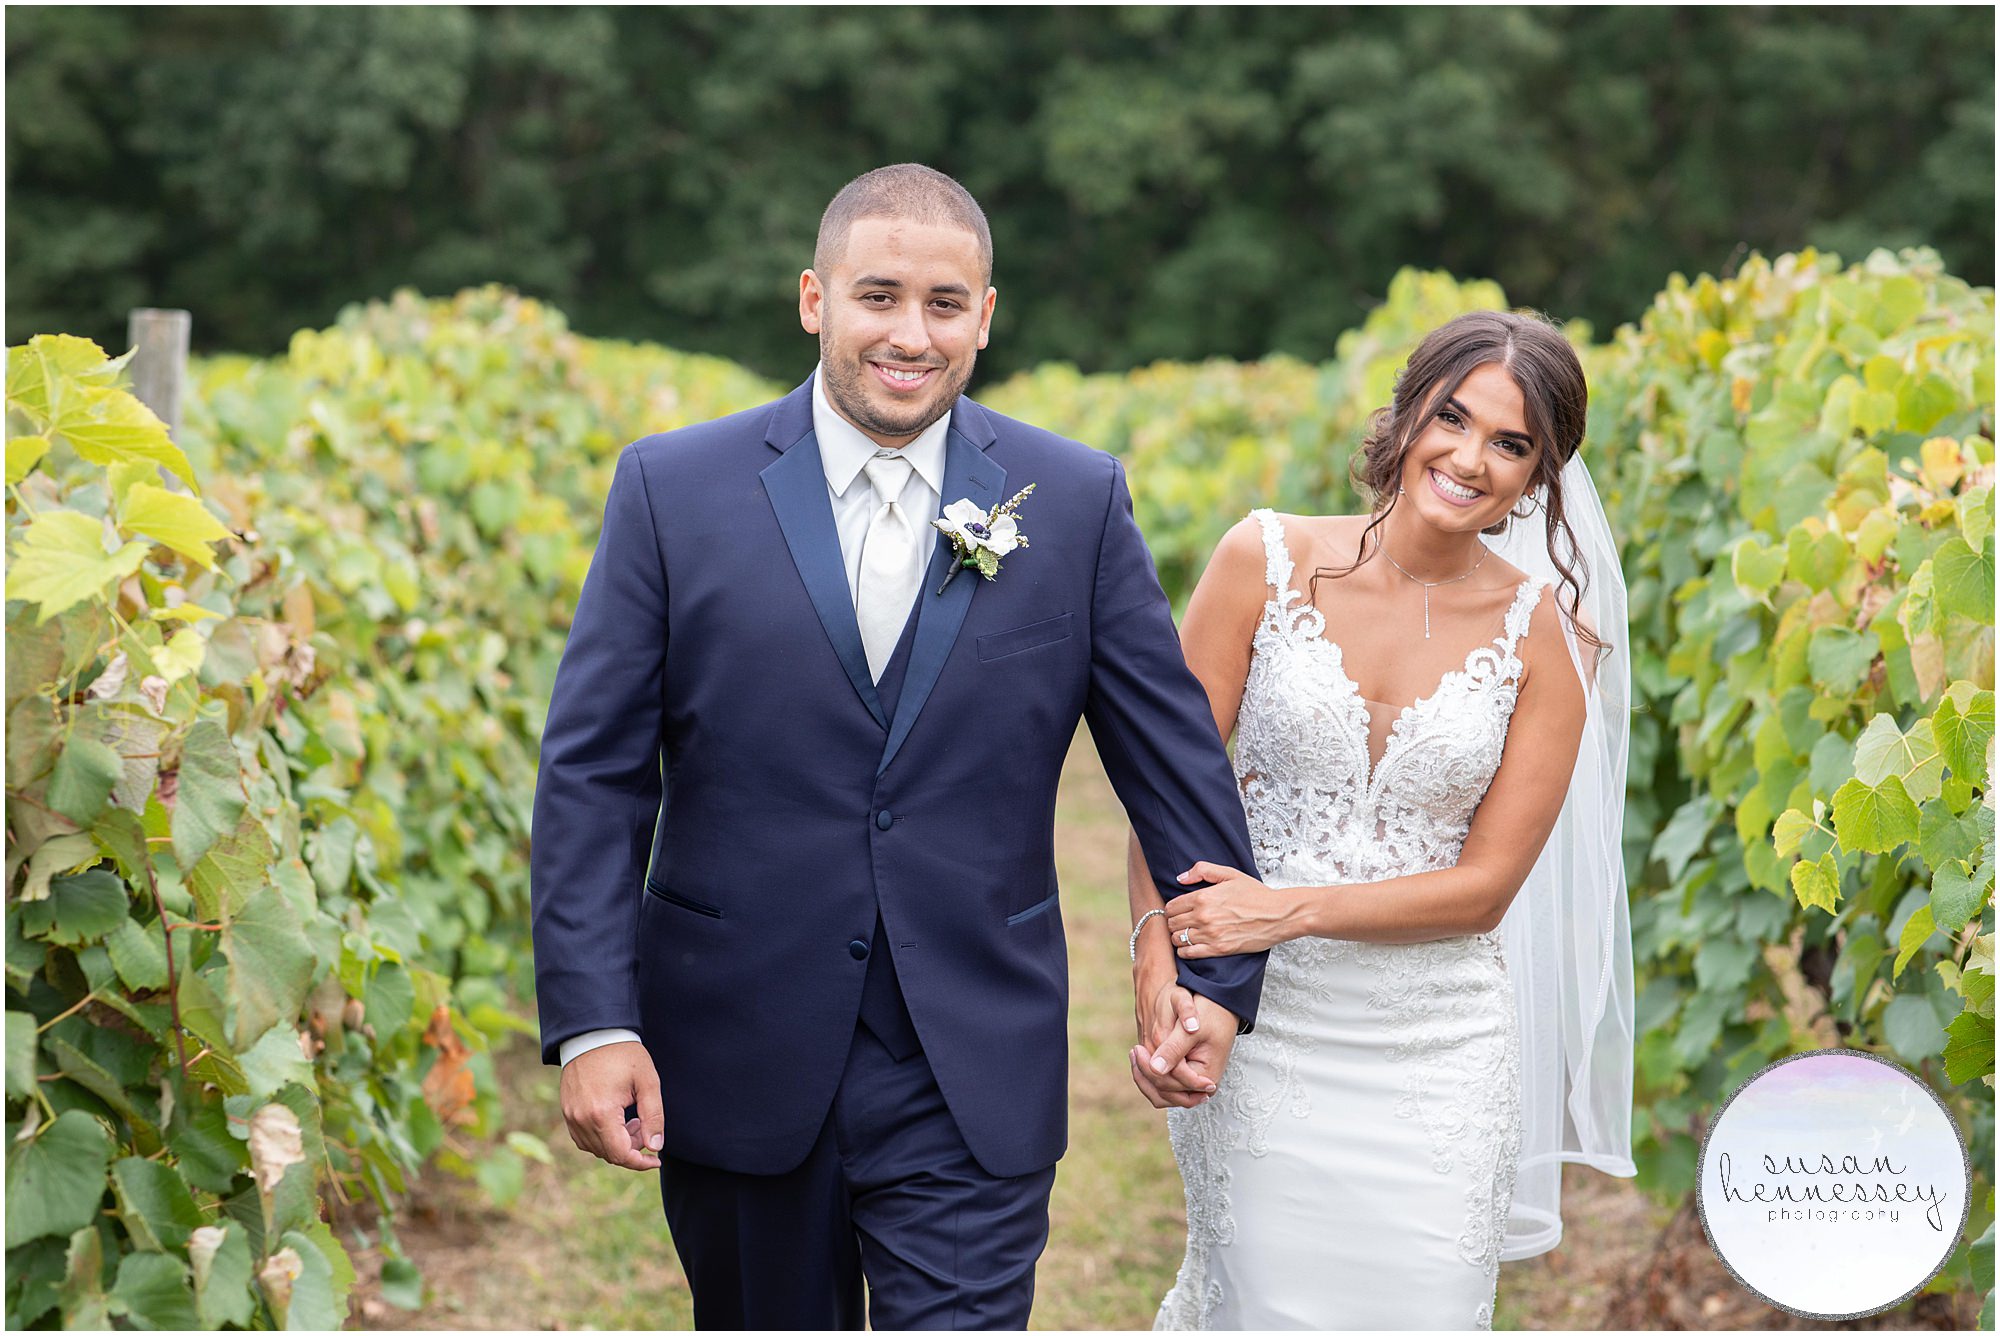 Happy bride and groom at Renault Winery wedding